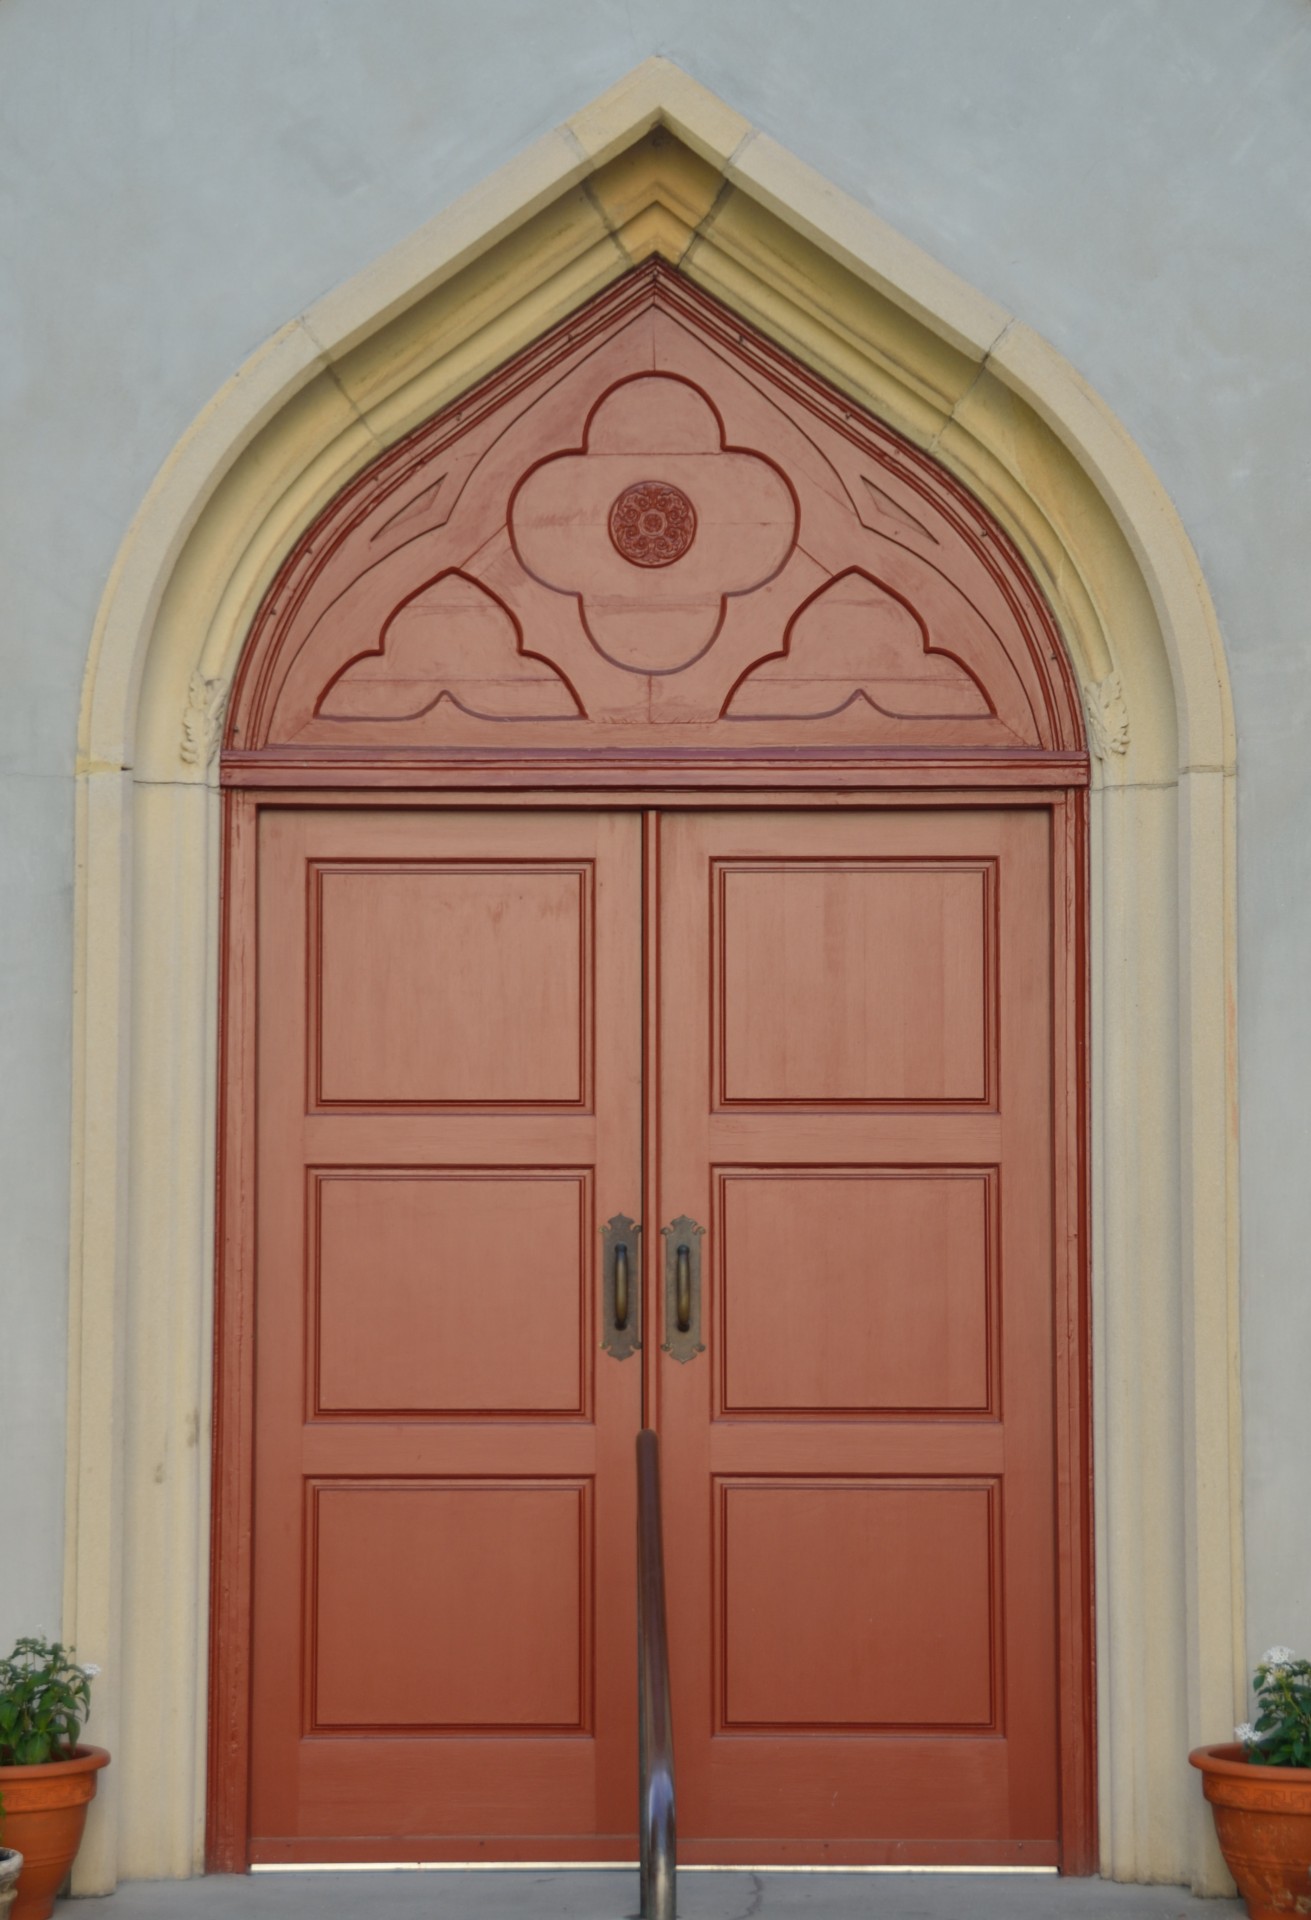 church door entrance free photo